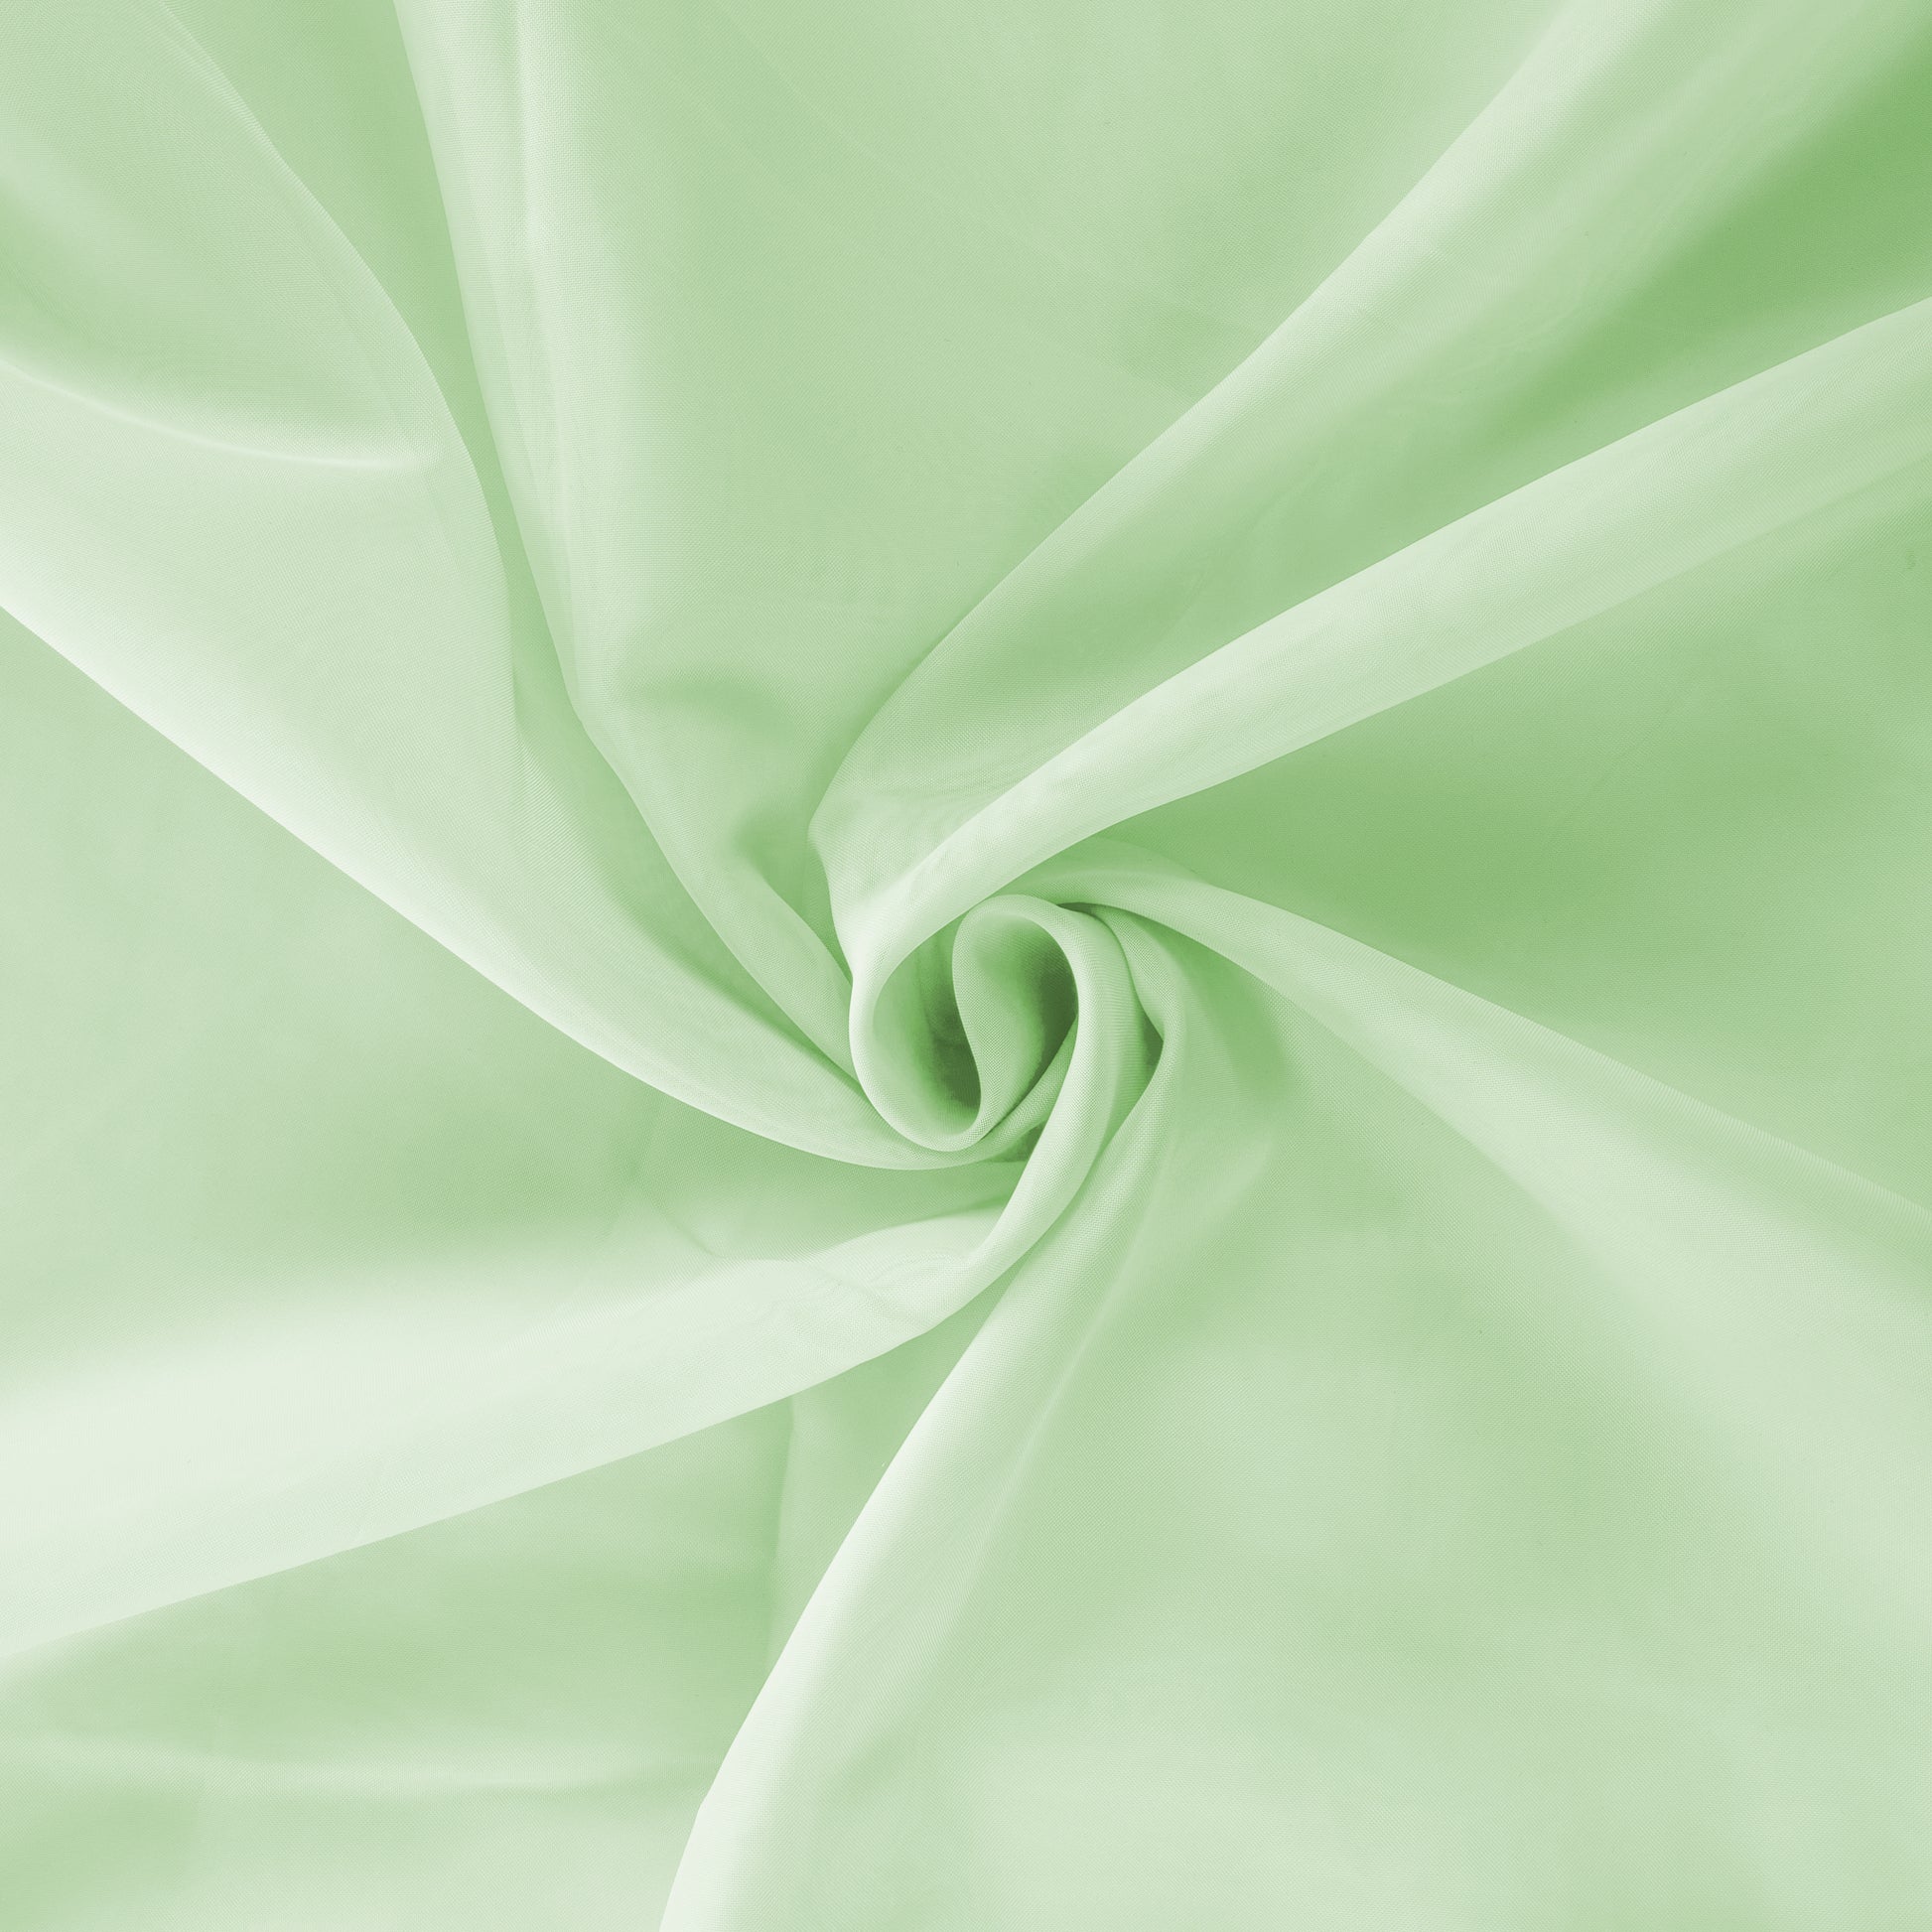 10 yards x 118" Flame Retardant (FR) Voile Sheer Fabric Roll/Bolt - Mint Green - CV Linens